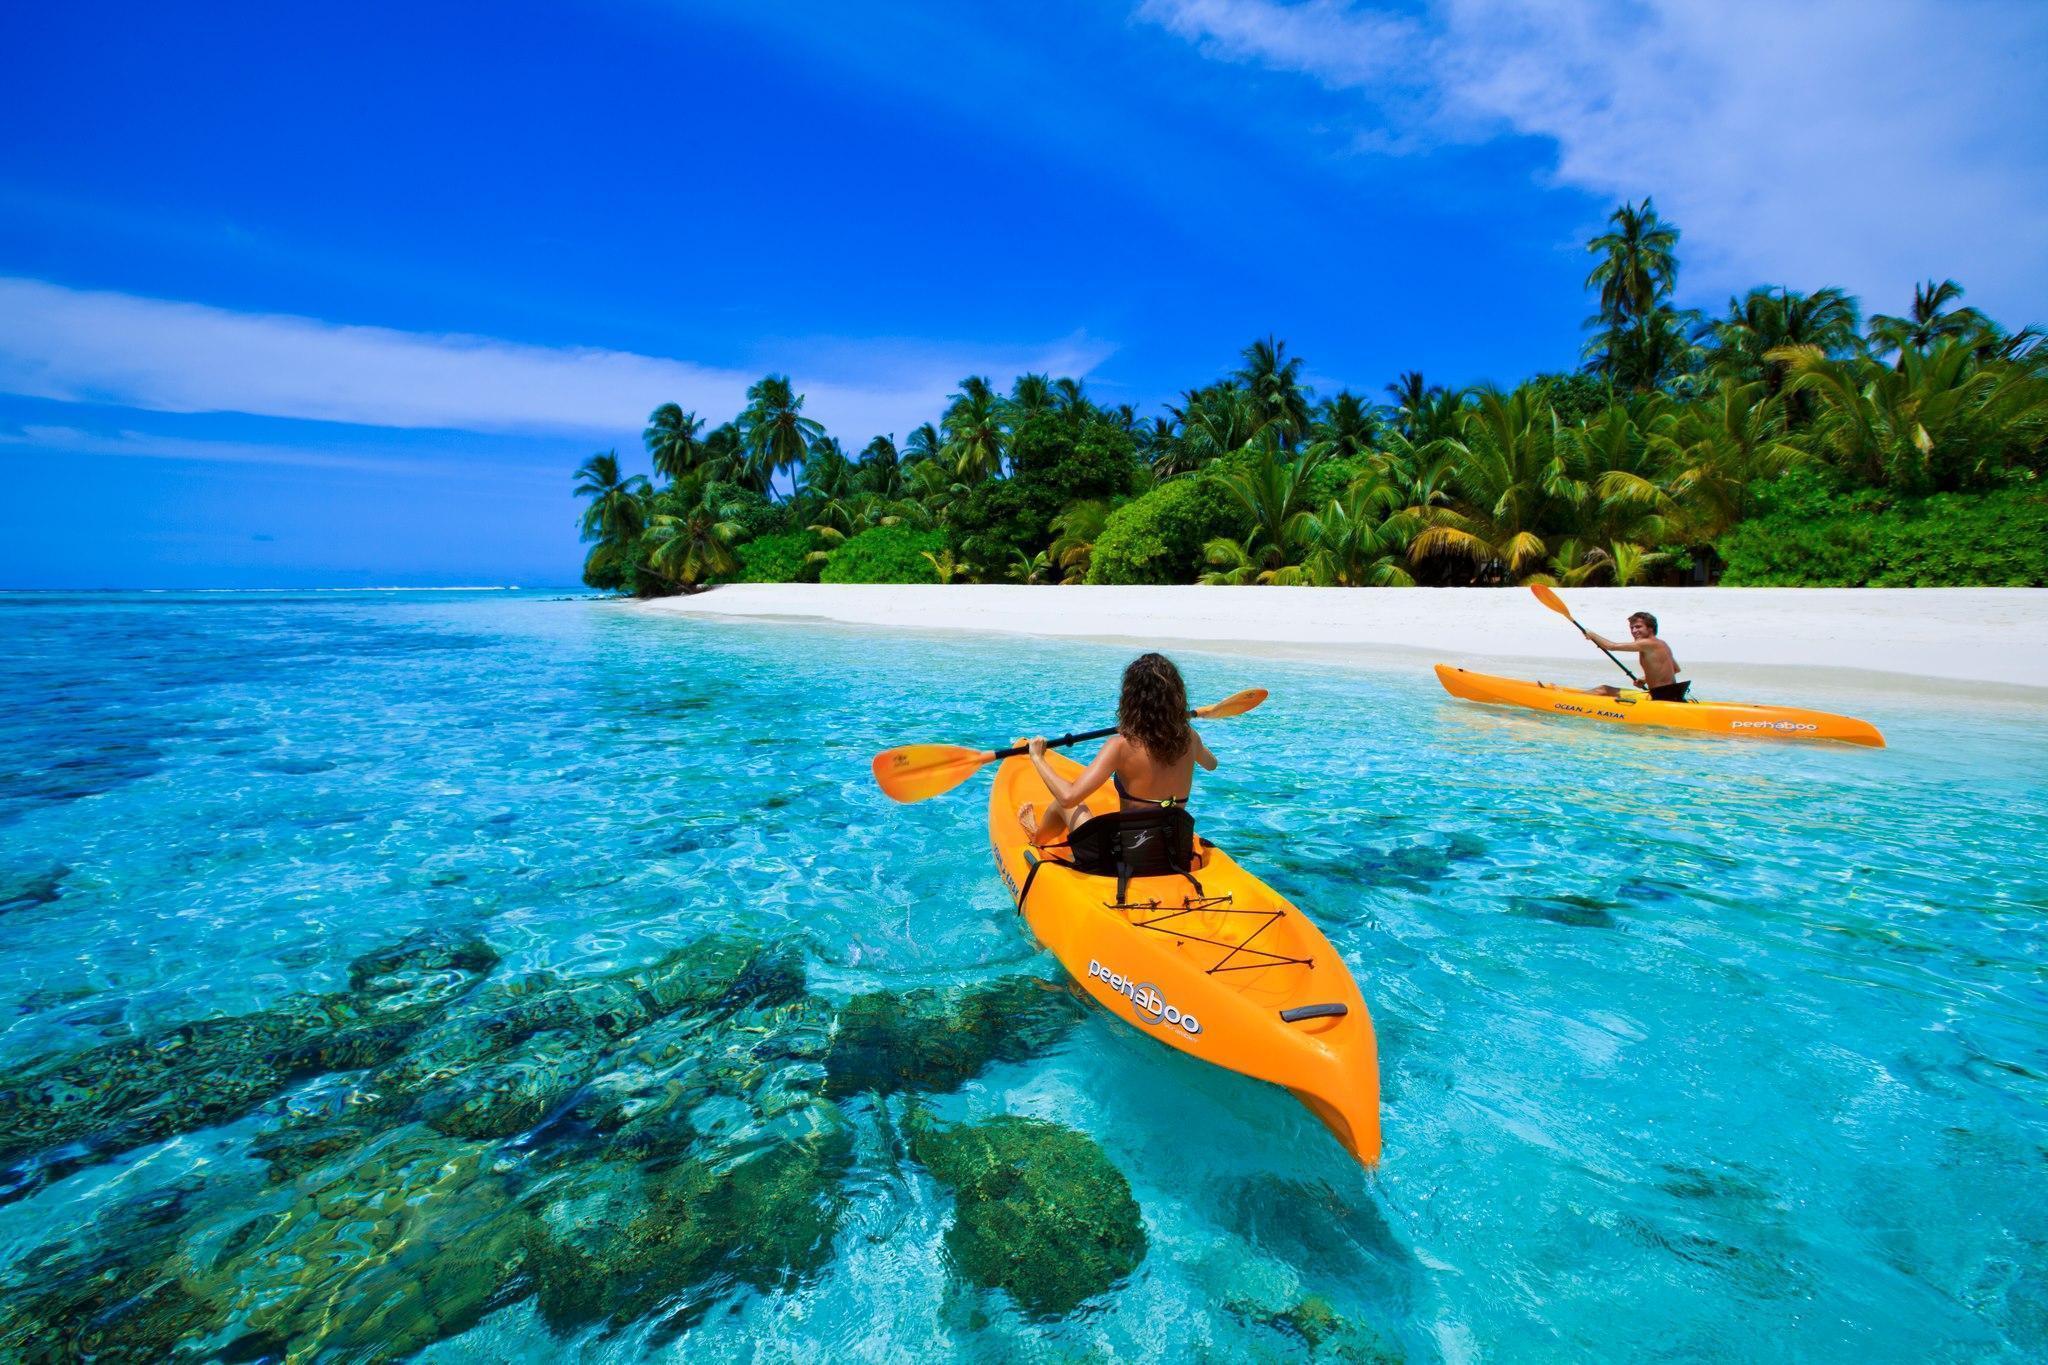 Kayaking the Maldives HD Wallpaper Free Download. HD Free